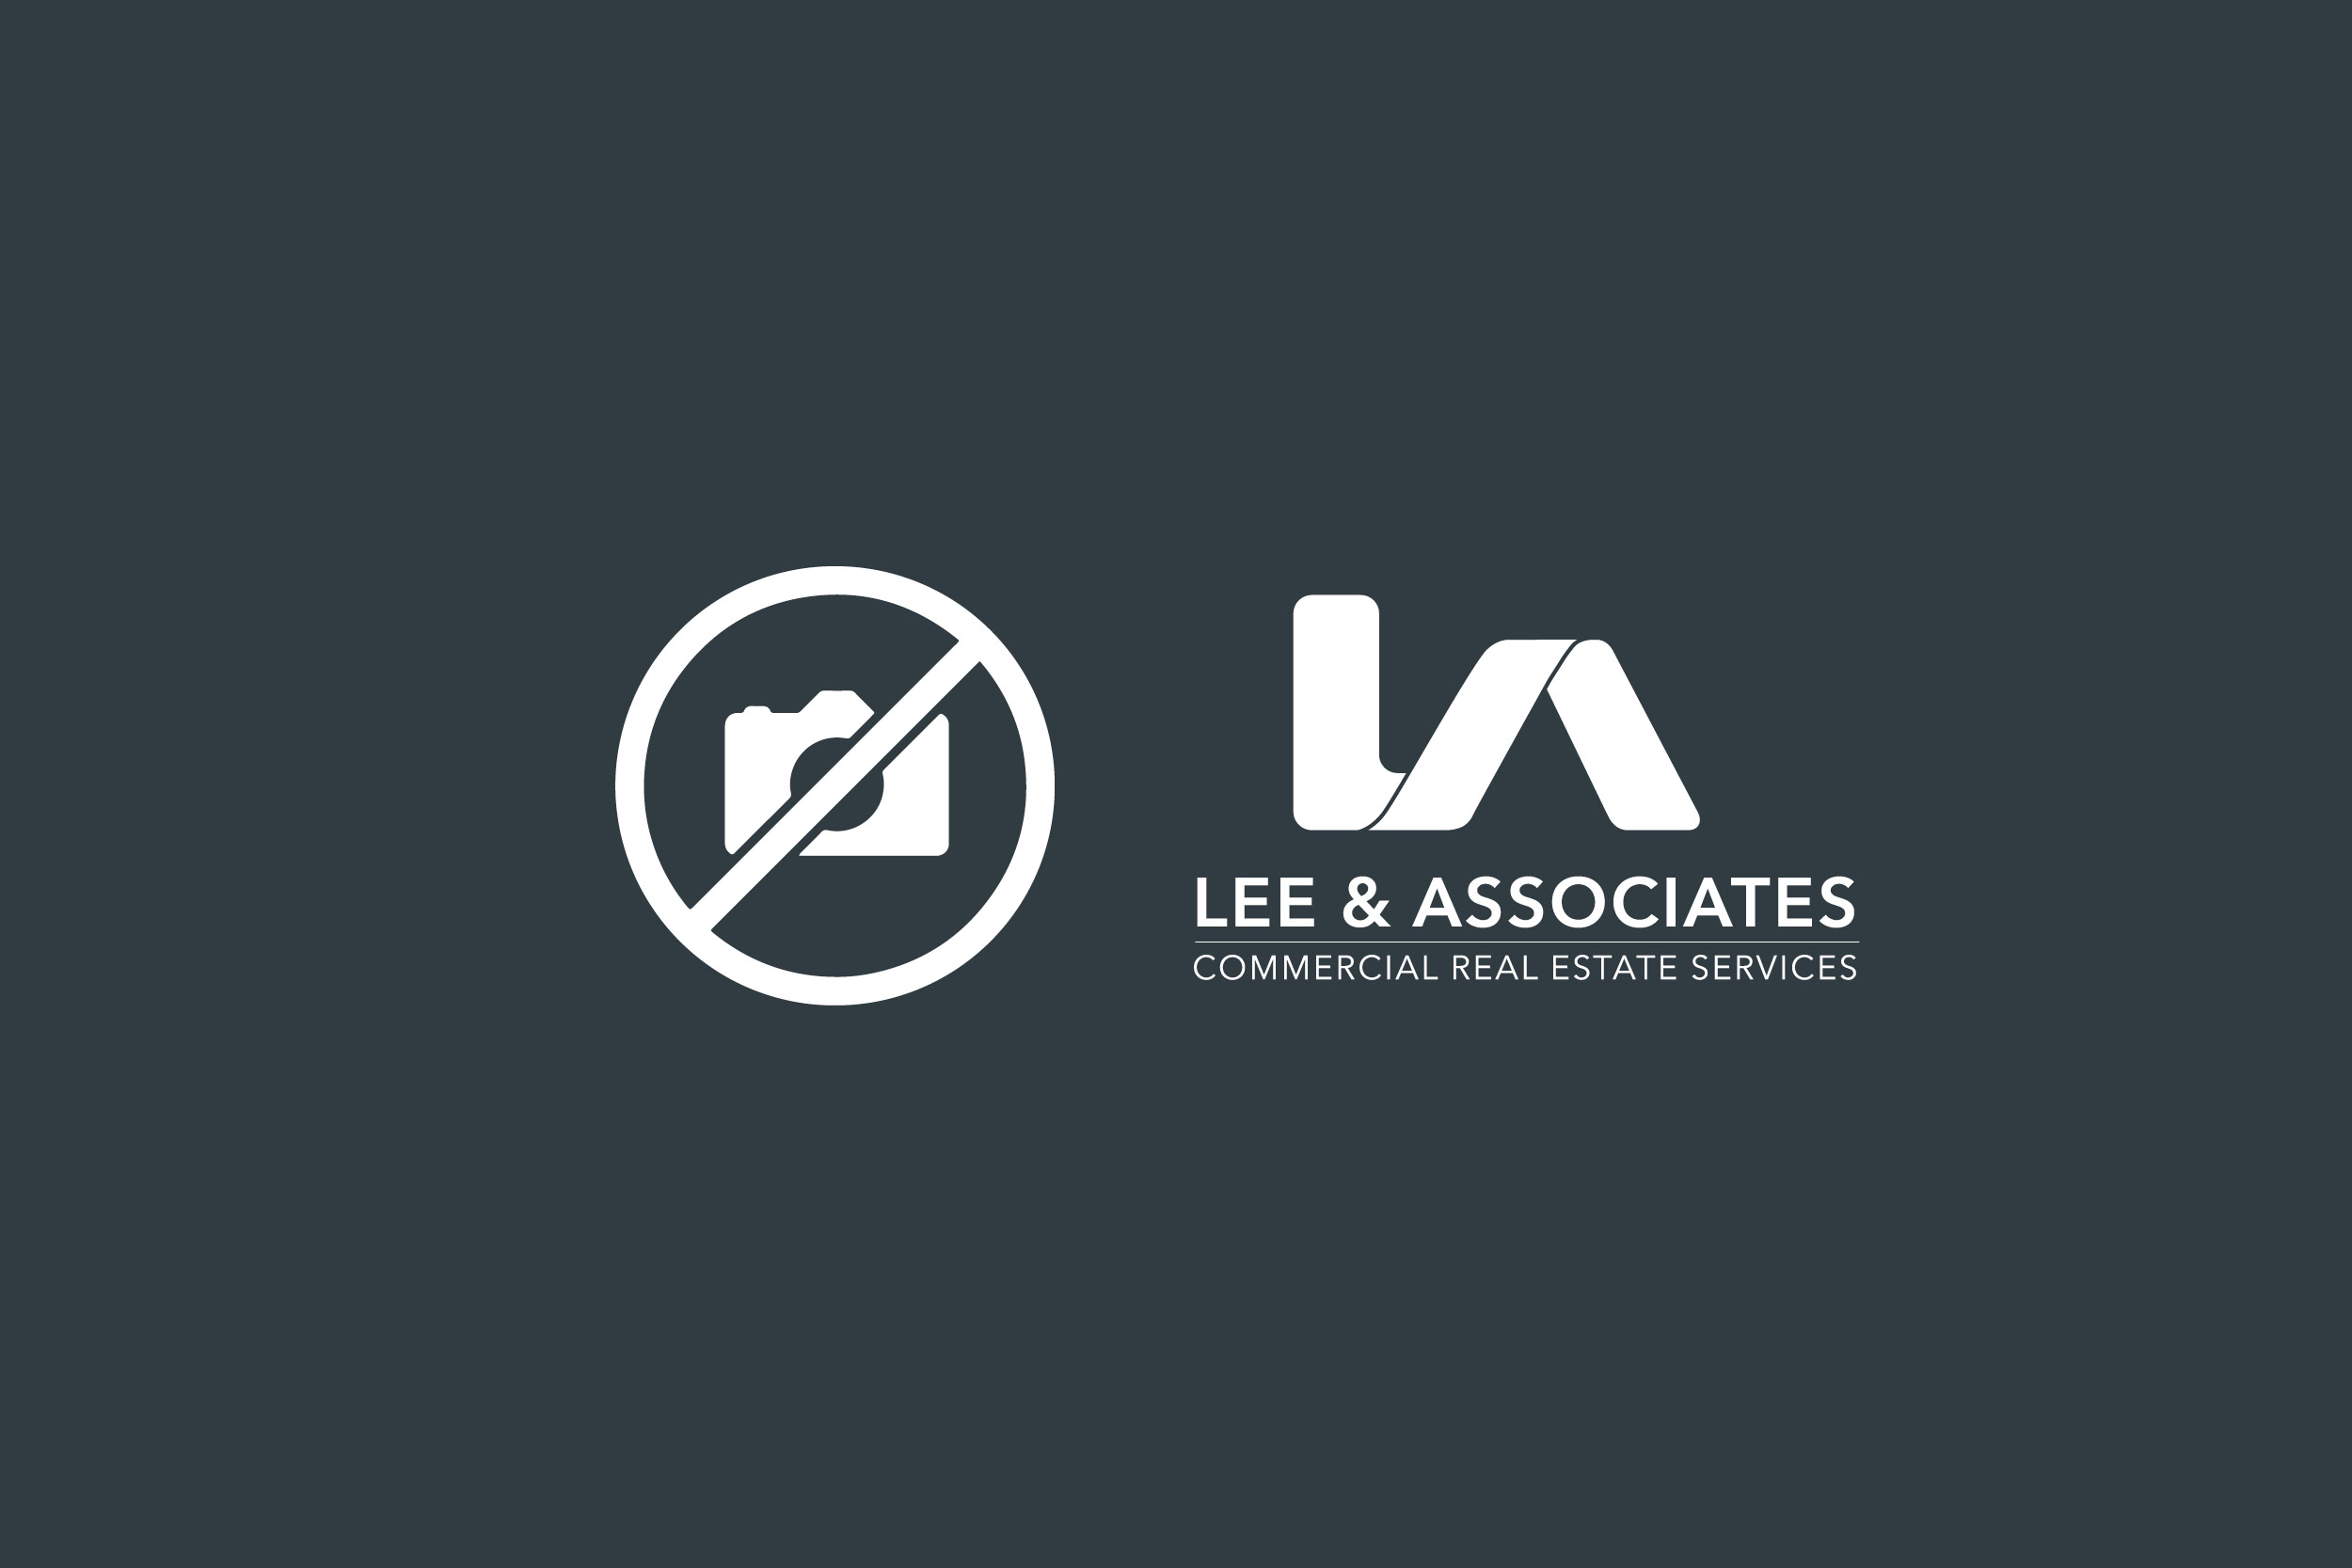 Lee & Associates Dallas Fort Worth Negotiates a 7,436 SF Industrial Lease Transaction